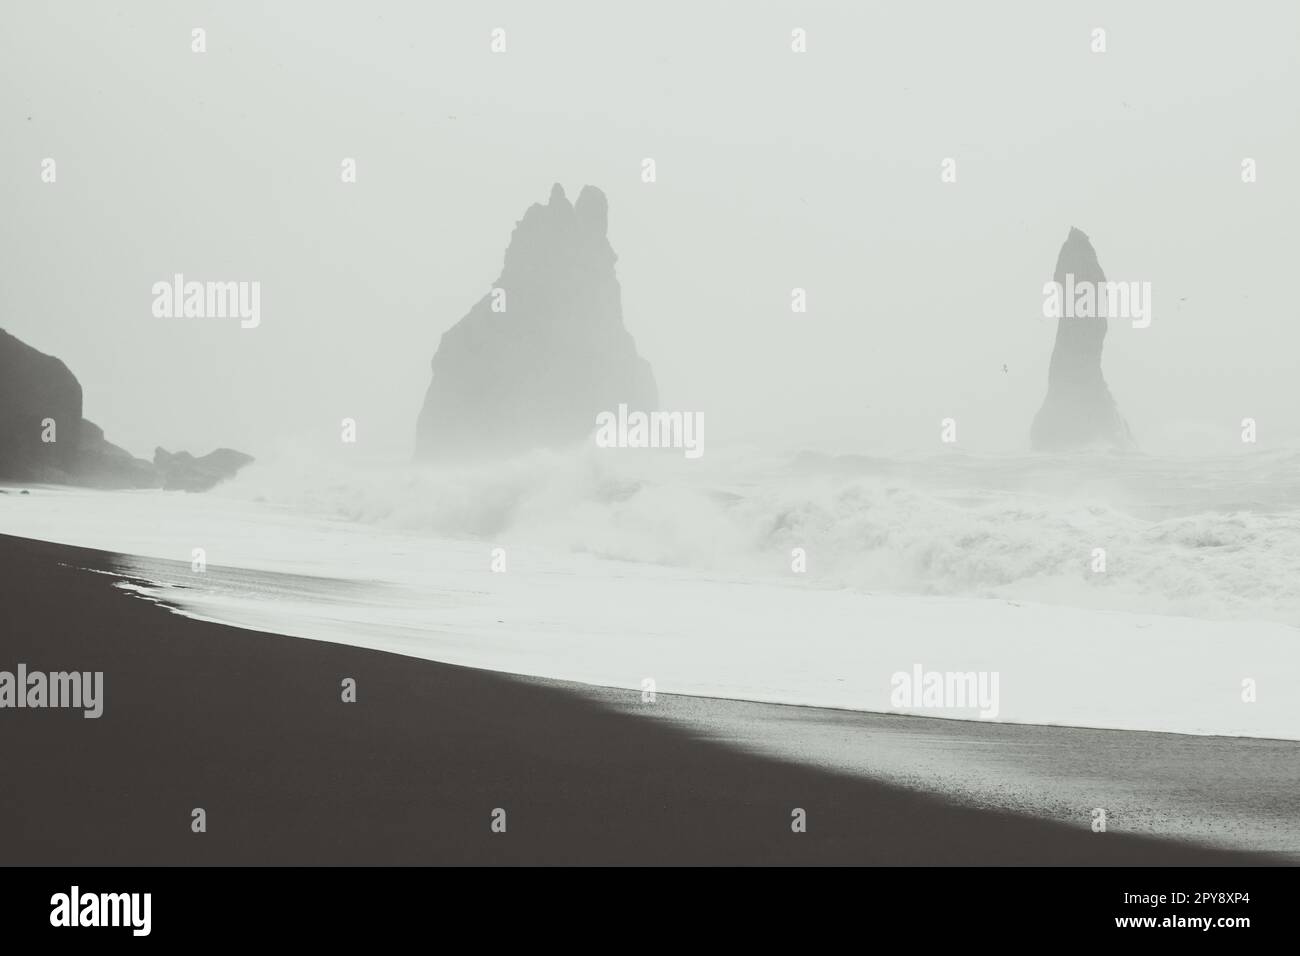 Riesige Wellen gegen Felsen Schwarzweiß-Landschaftsfoto Stockfoto